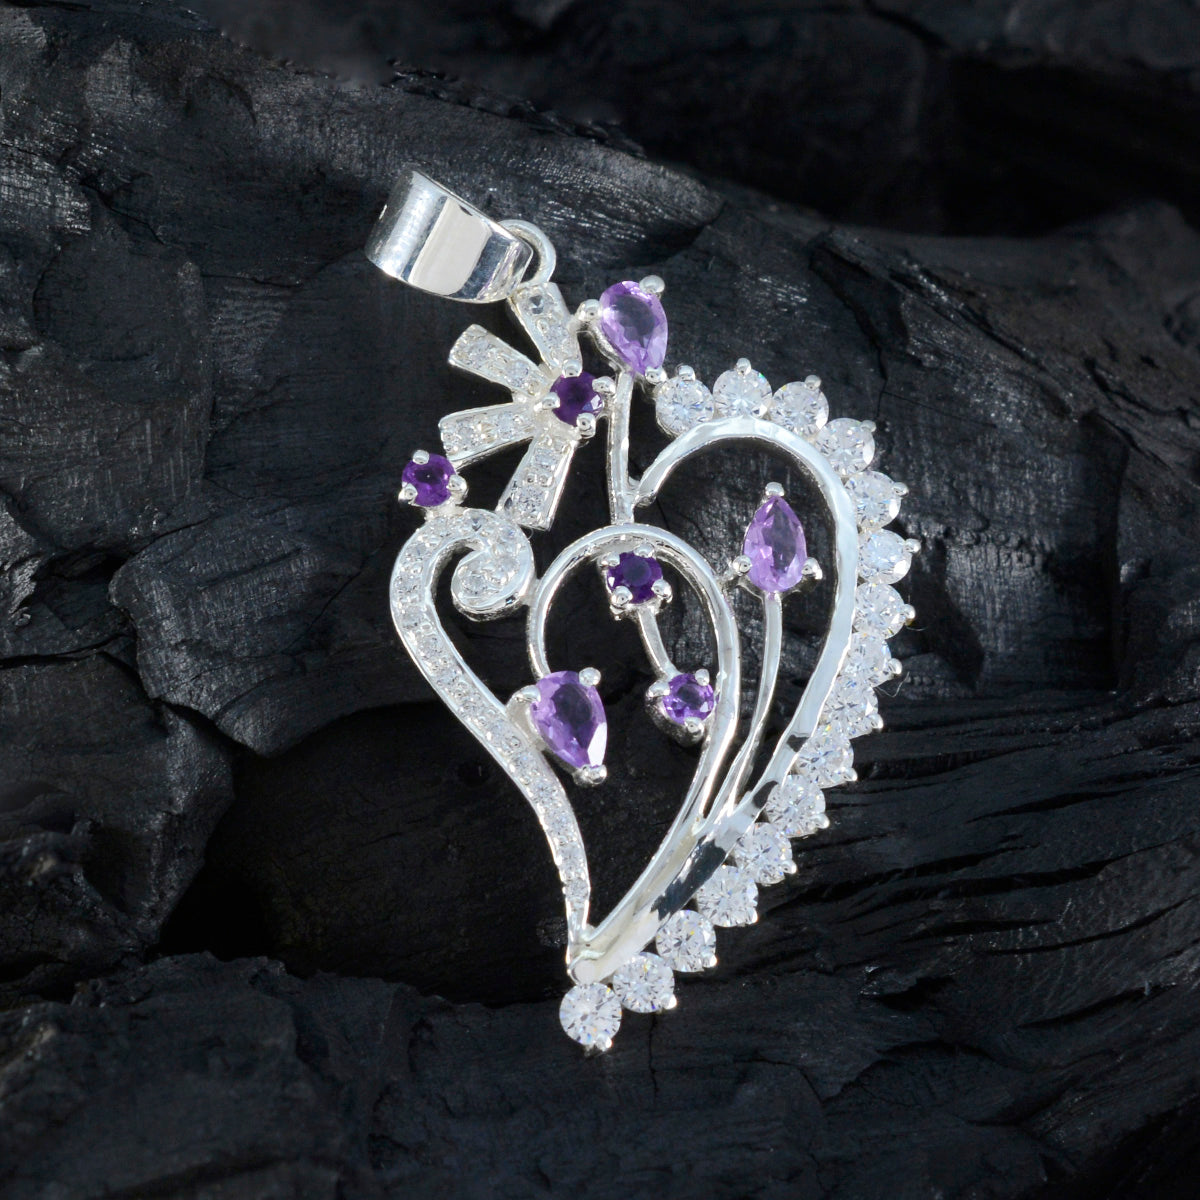 Riyo Comely Gems Multi Facet Paarse Amethist Zilveren Hanger Cadeau voor verloving